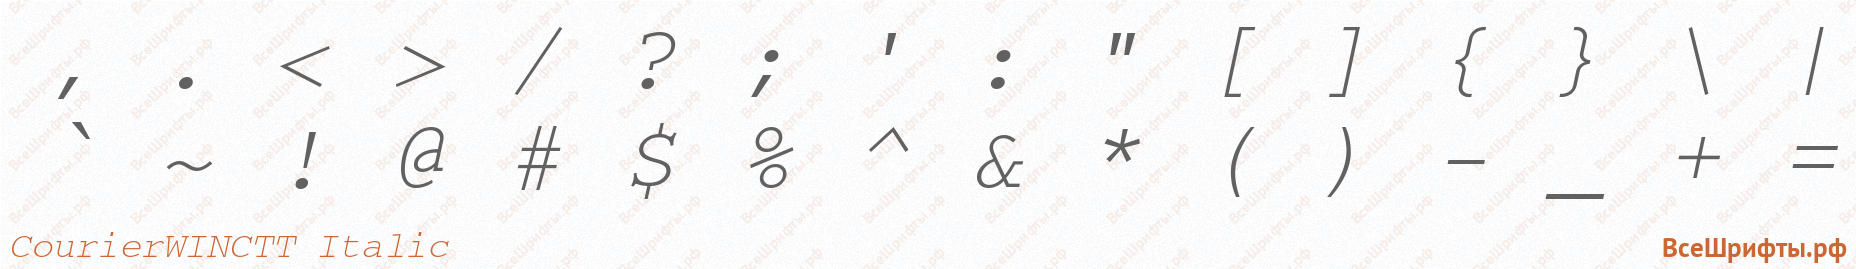 Шрифт CourierWINCTT Italic со знаками препинания и пунктуации